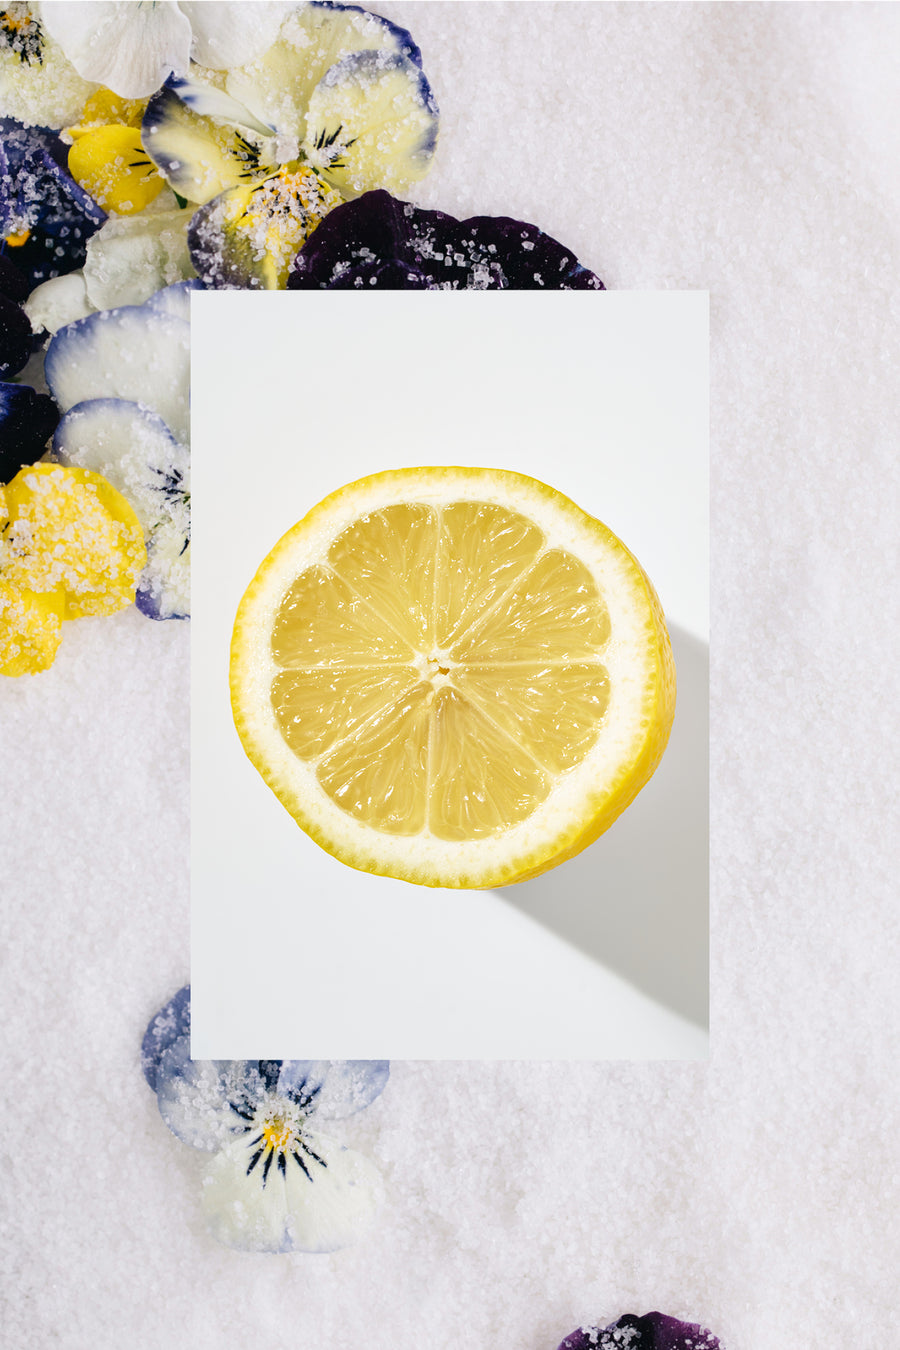 A single fresh lemon slice superimposed over sugar and flowers